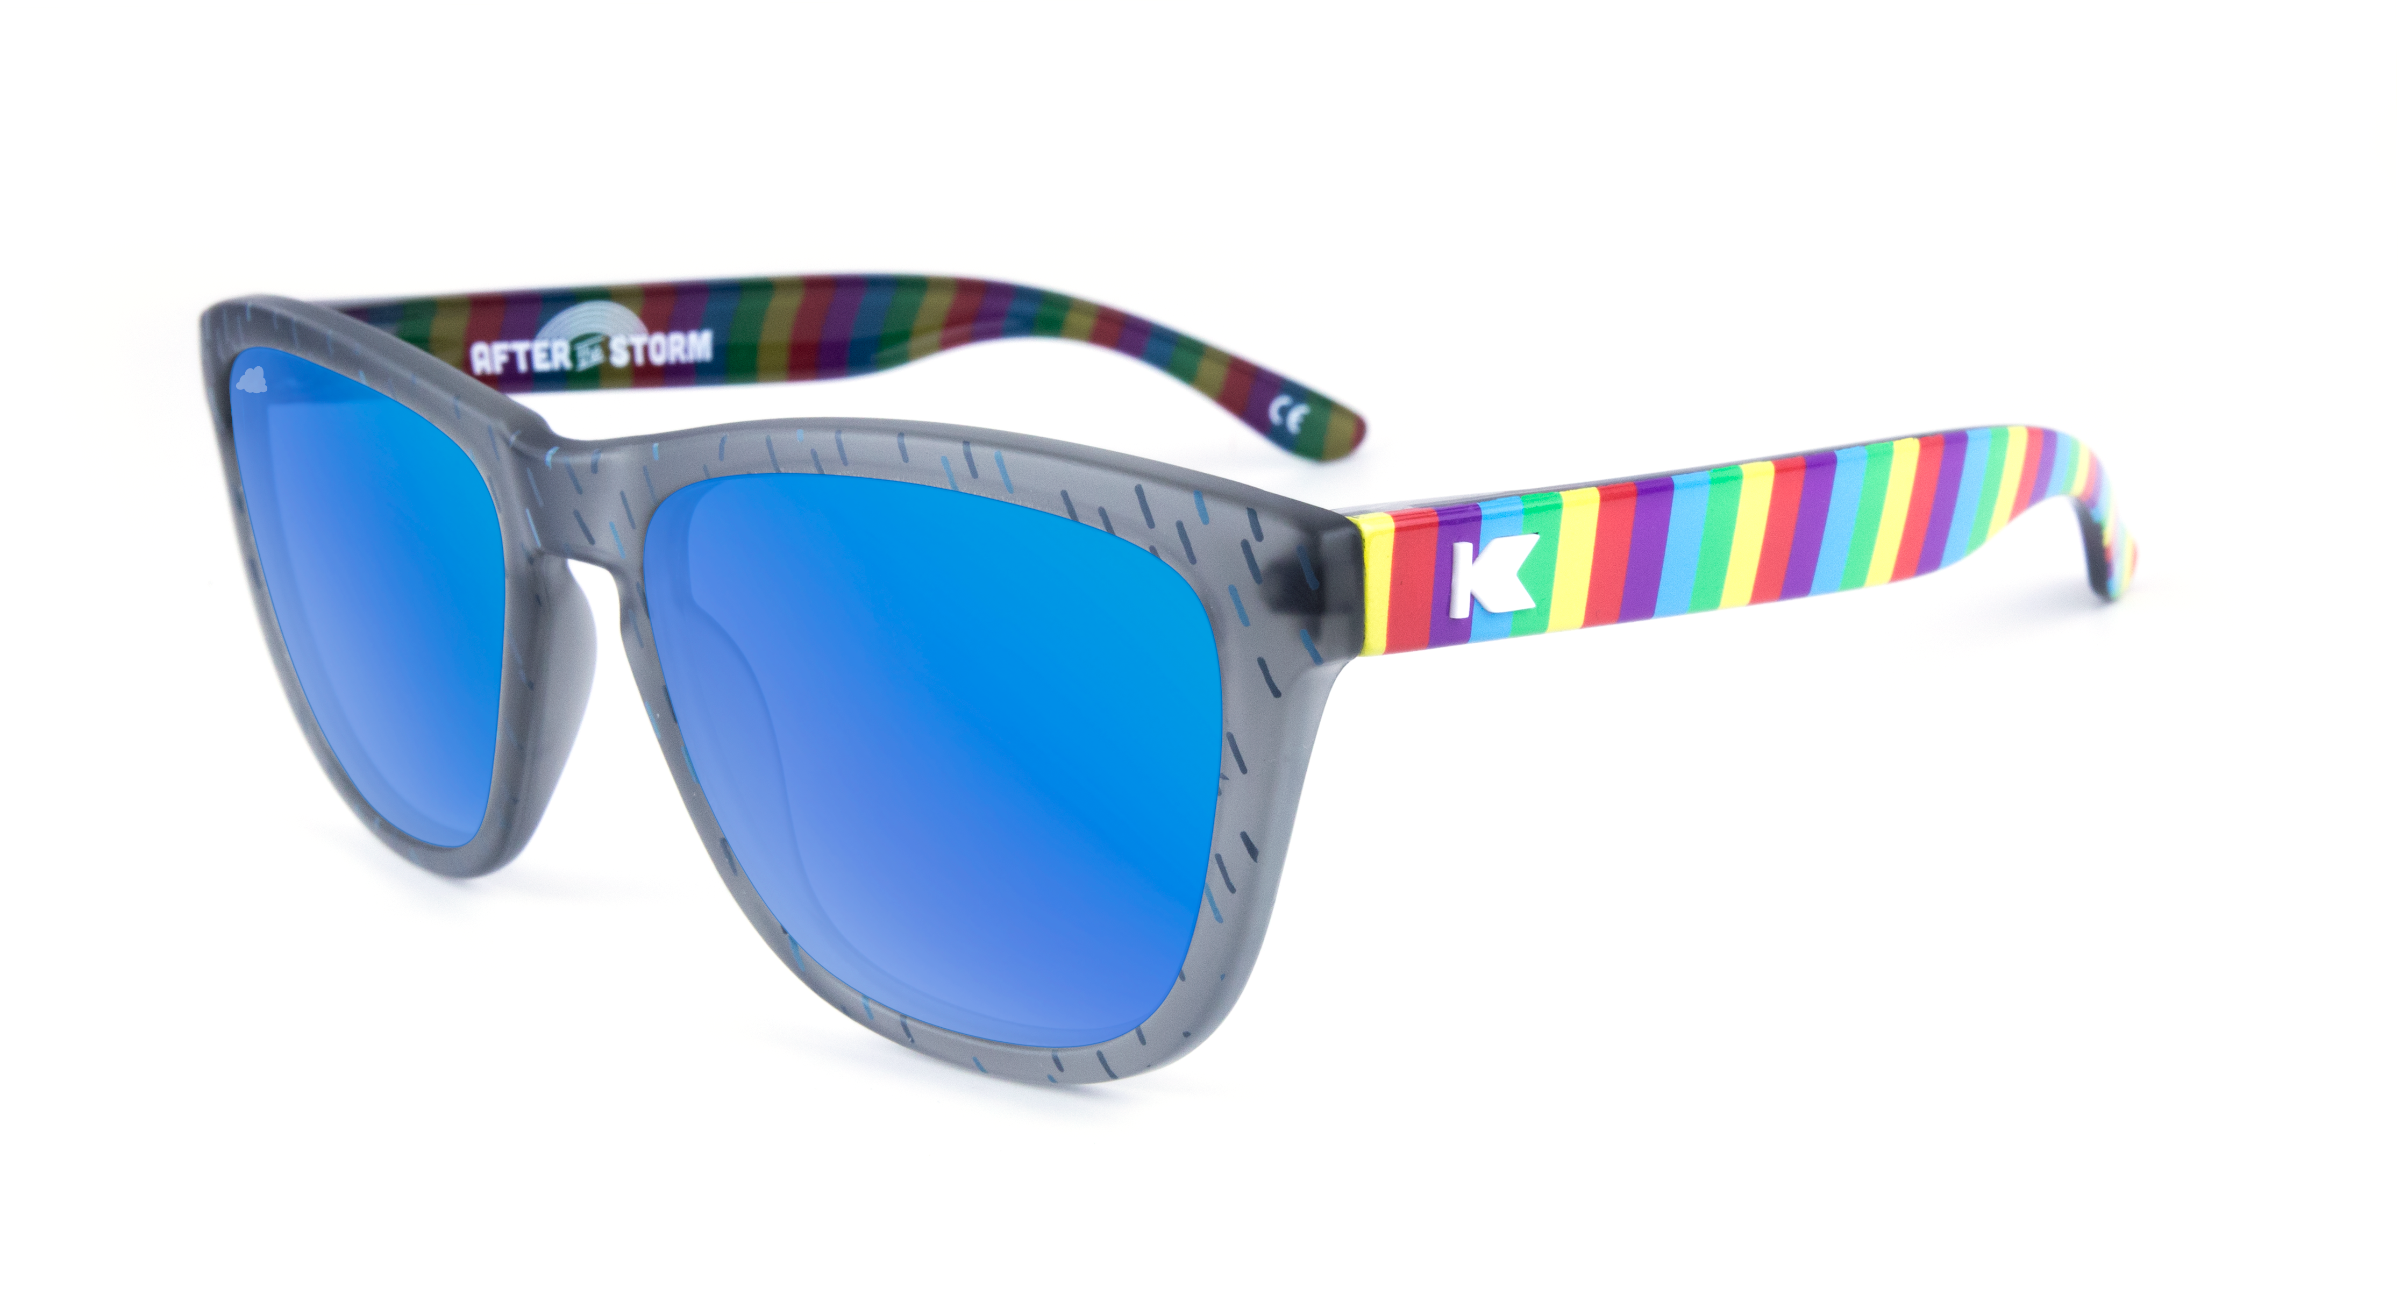 Knockaround Releases âAfter the Stormâ Sunglasses Designed by a San Diego 5th Grader